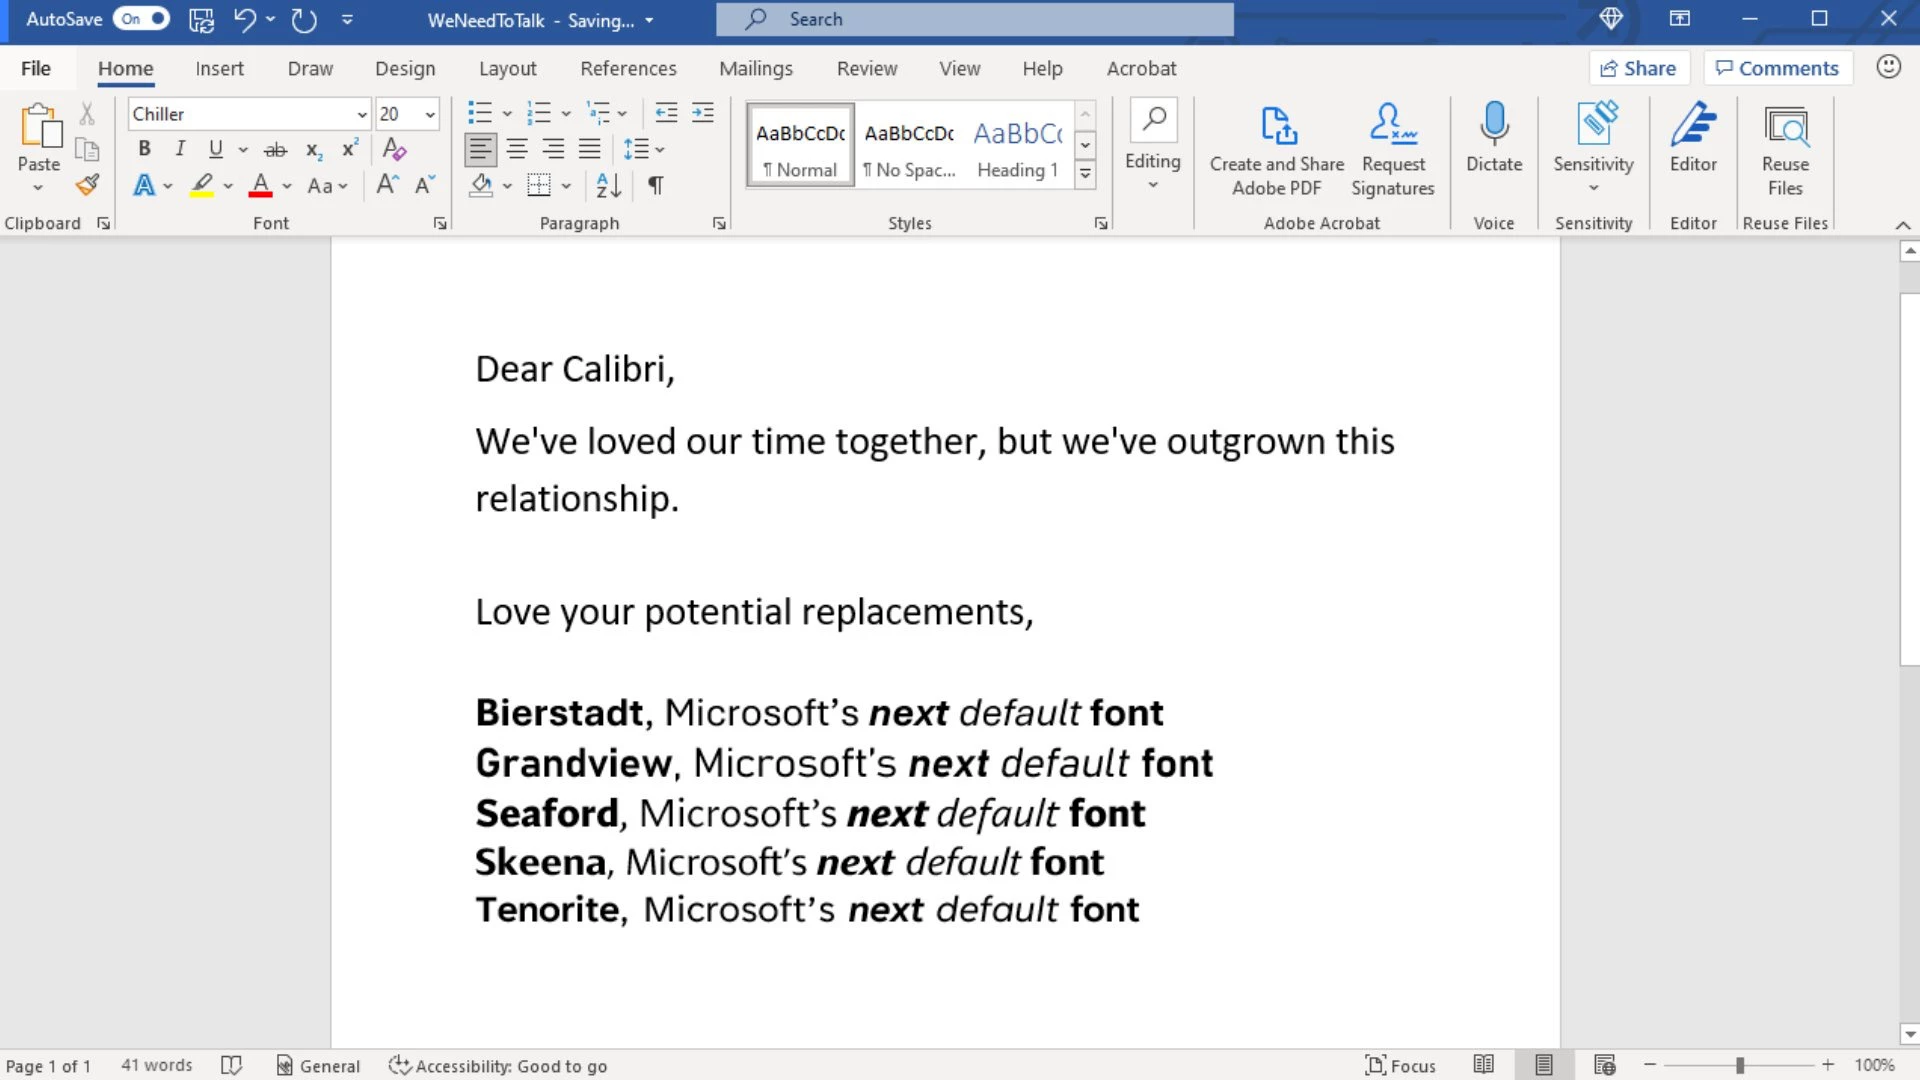 Finding Microsoft’s next default font.